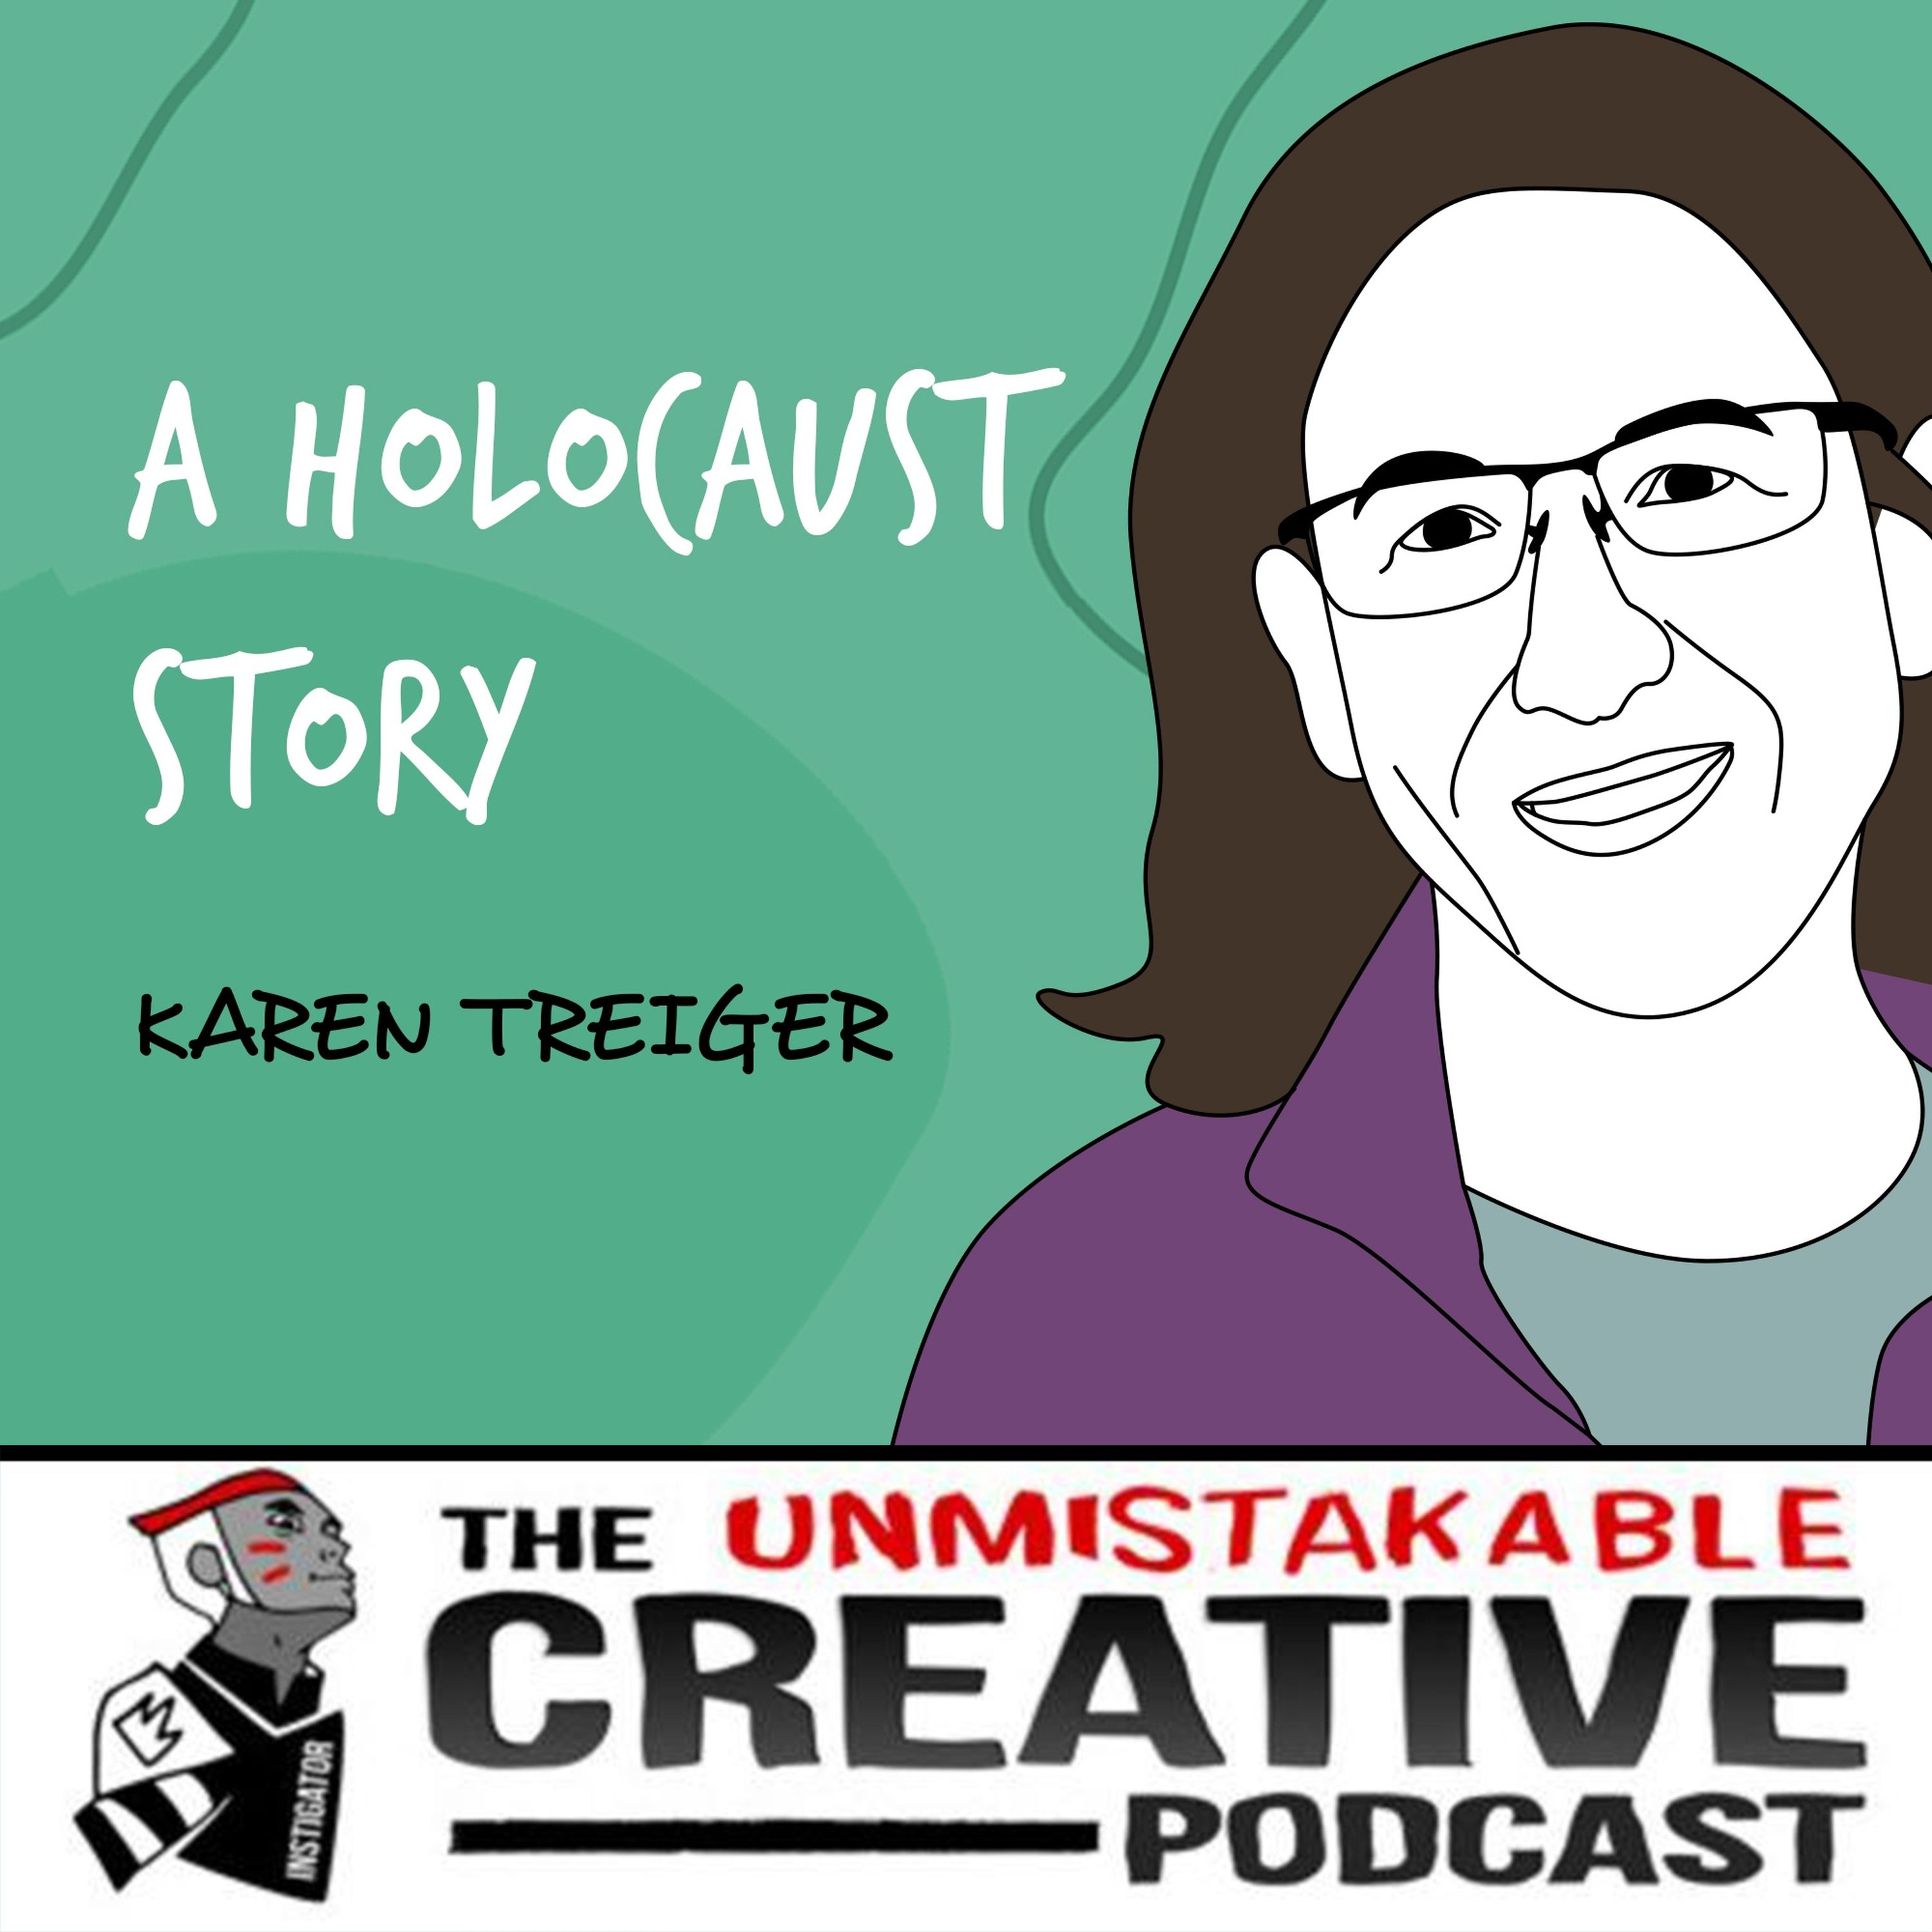 Karen Treiger | A Holocaust Story Image